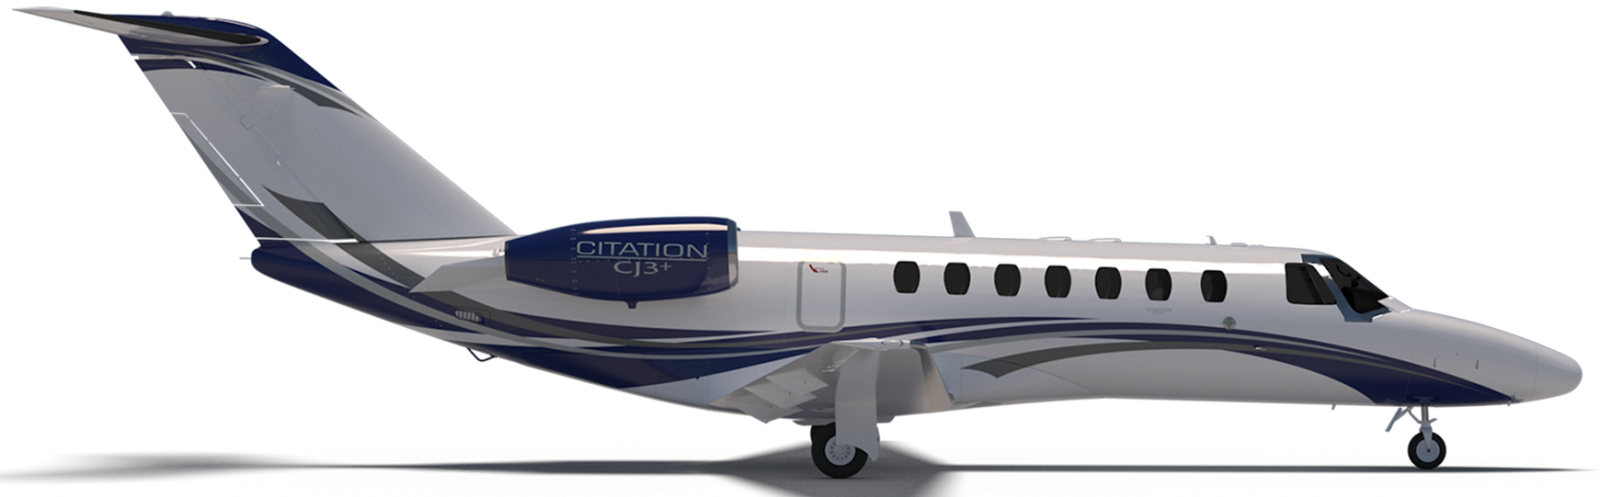 Cessna Citation CJ3+ In The UAE